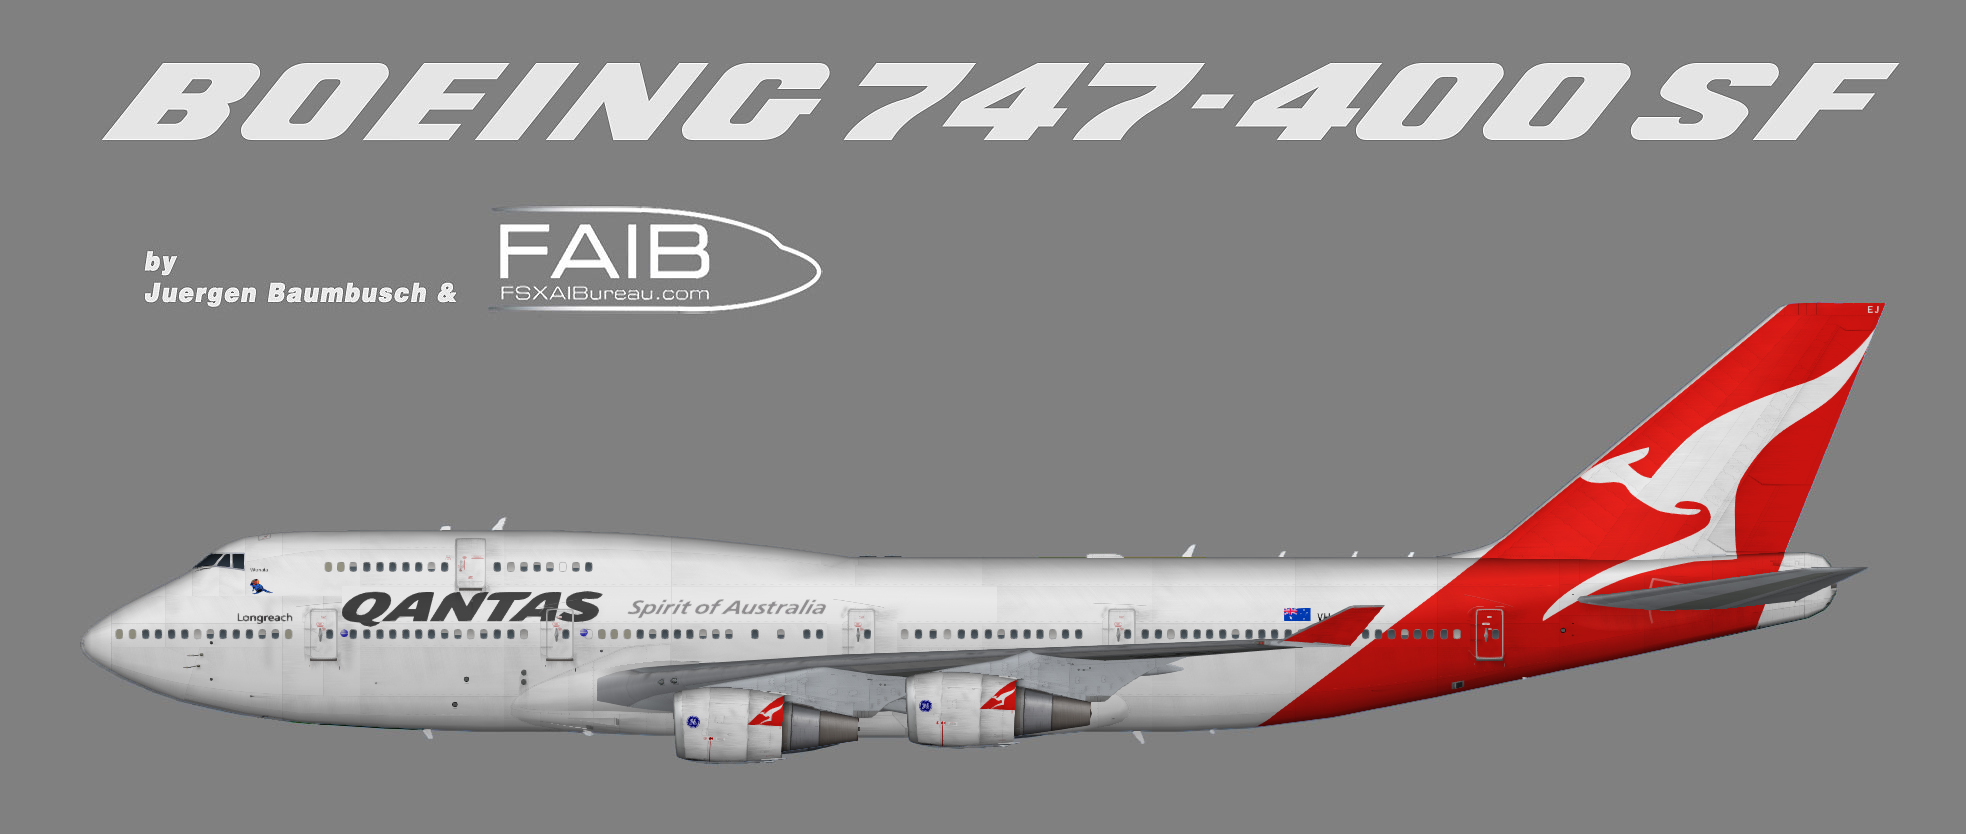 Qantas Boeing 747-400 “Wunala Dreaming”